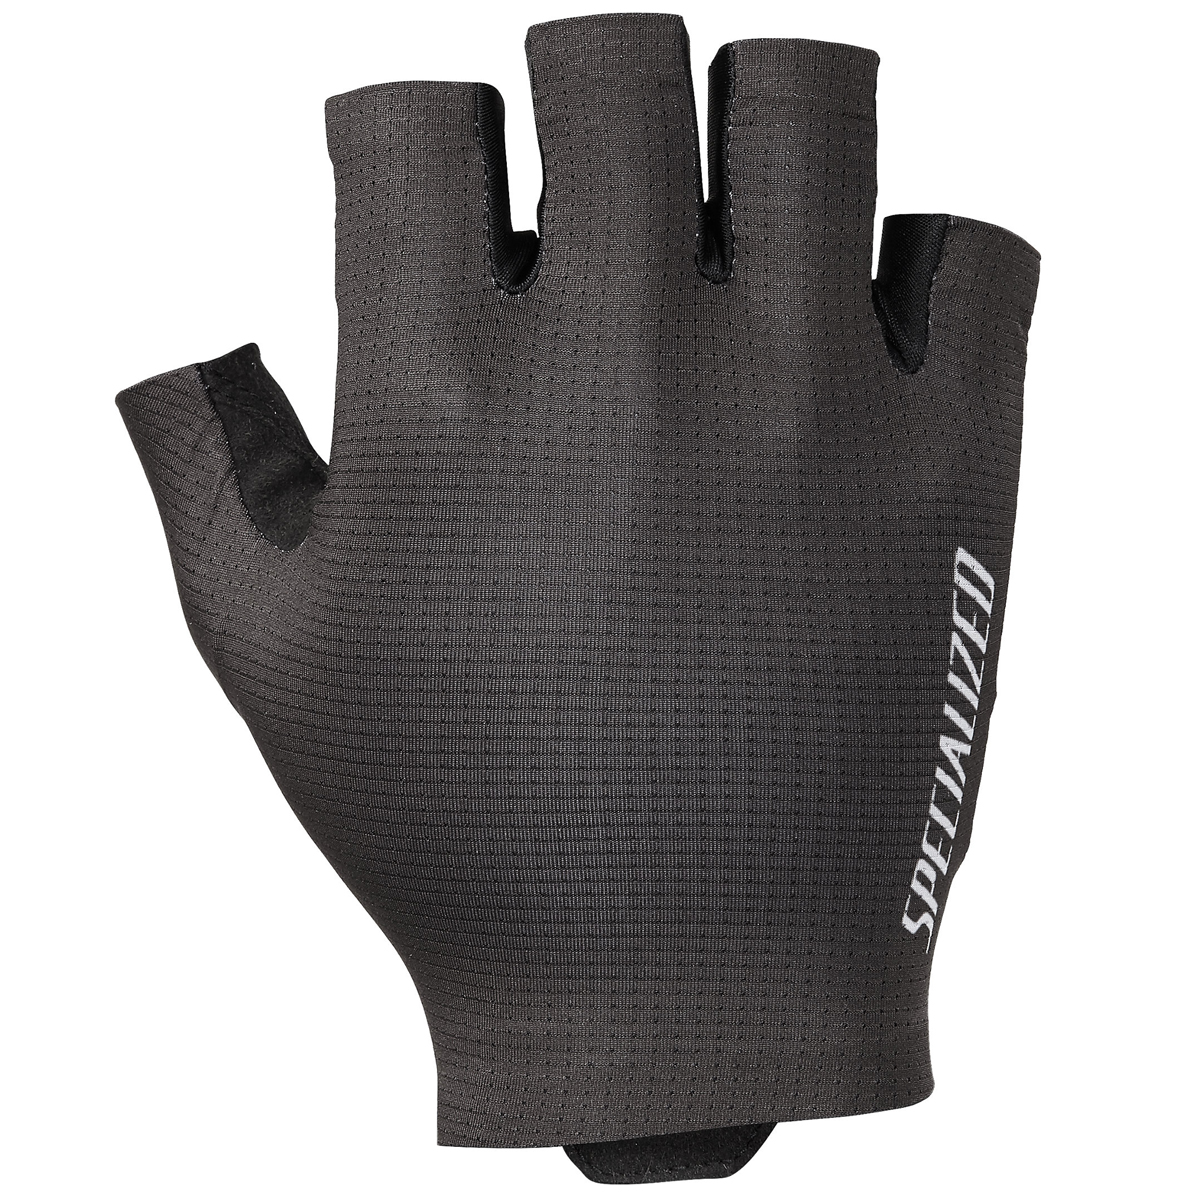 Productfoto van Specialized SL Pro SF Gloves - black